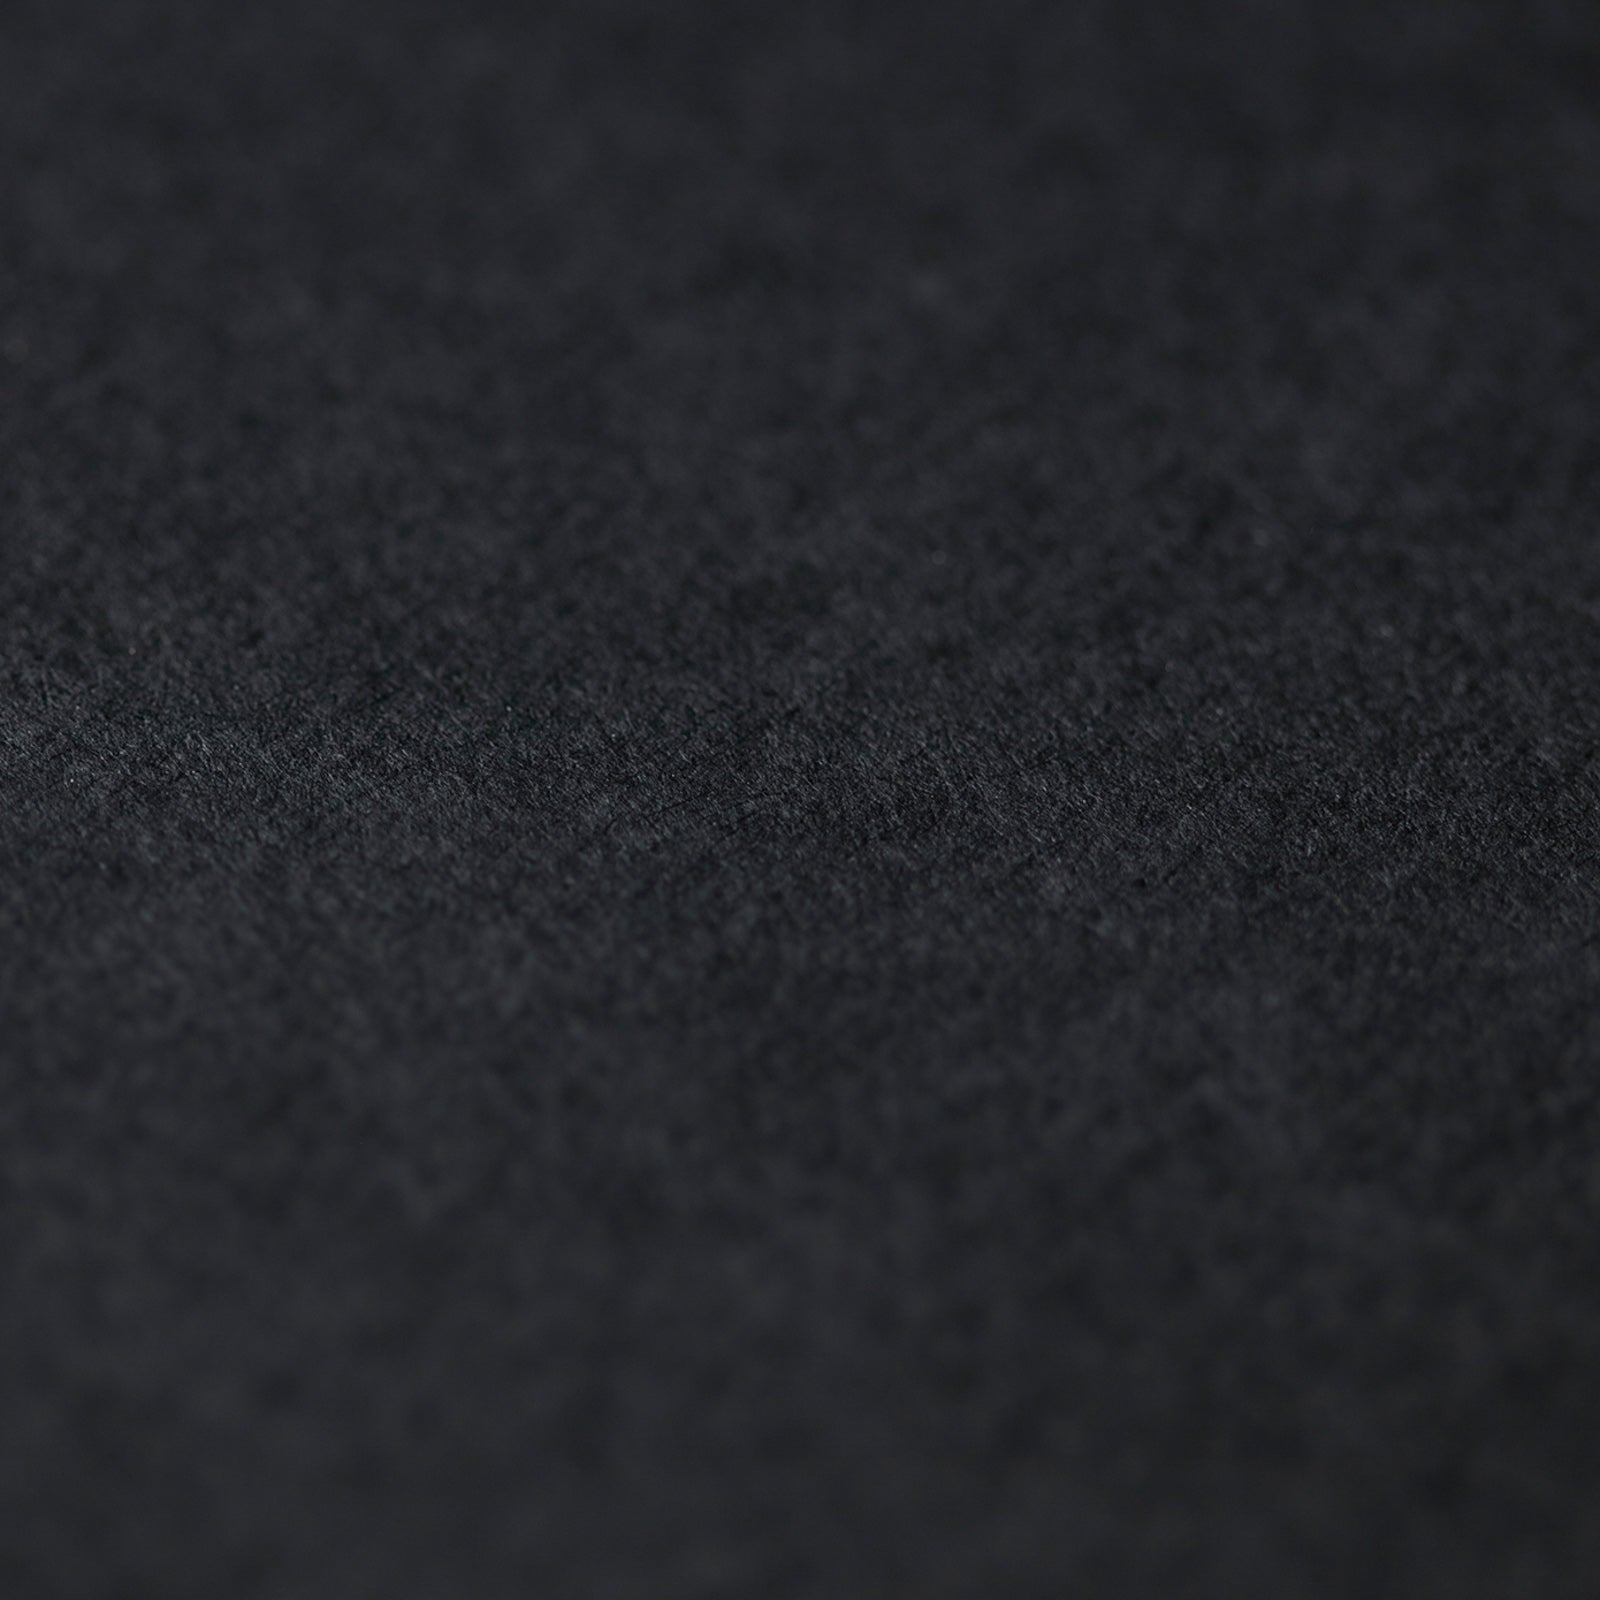 Stillman & Birn Nova-Black Softcover 14x21,6cm 150g 46 sheets